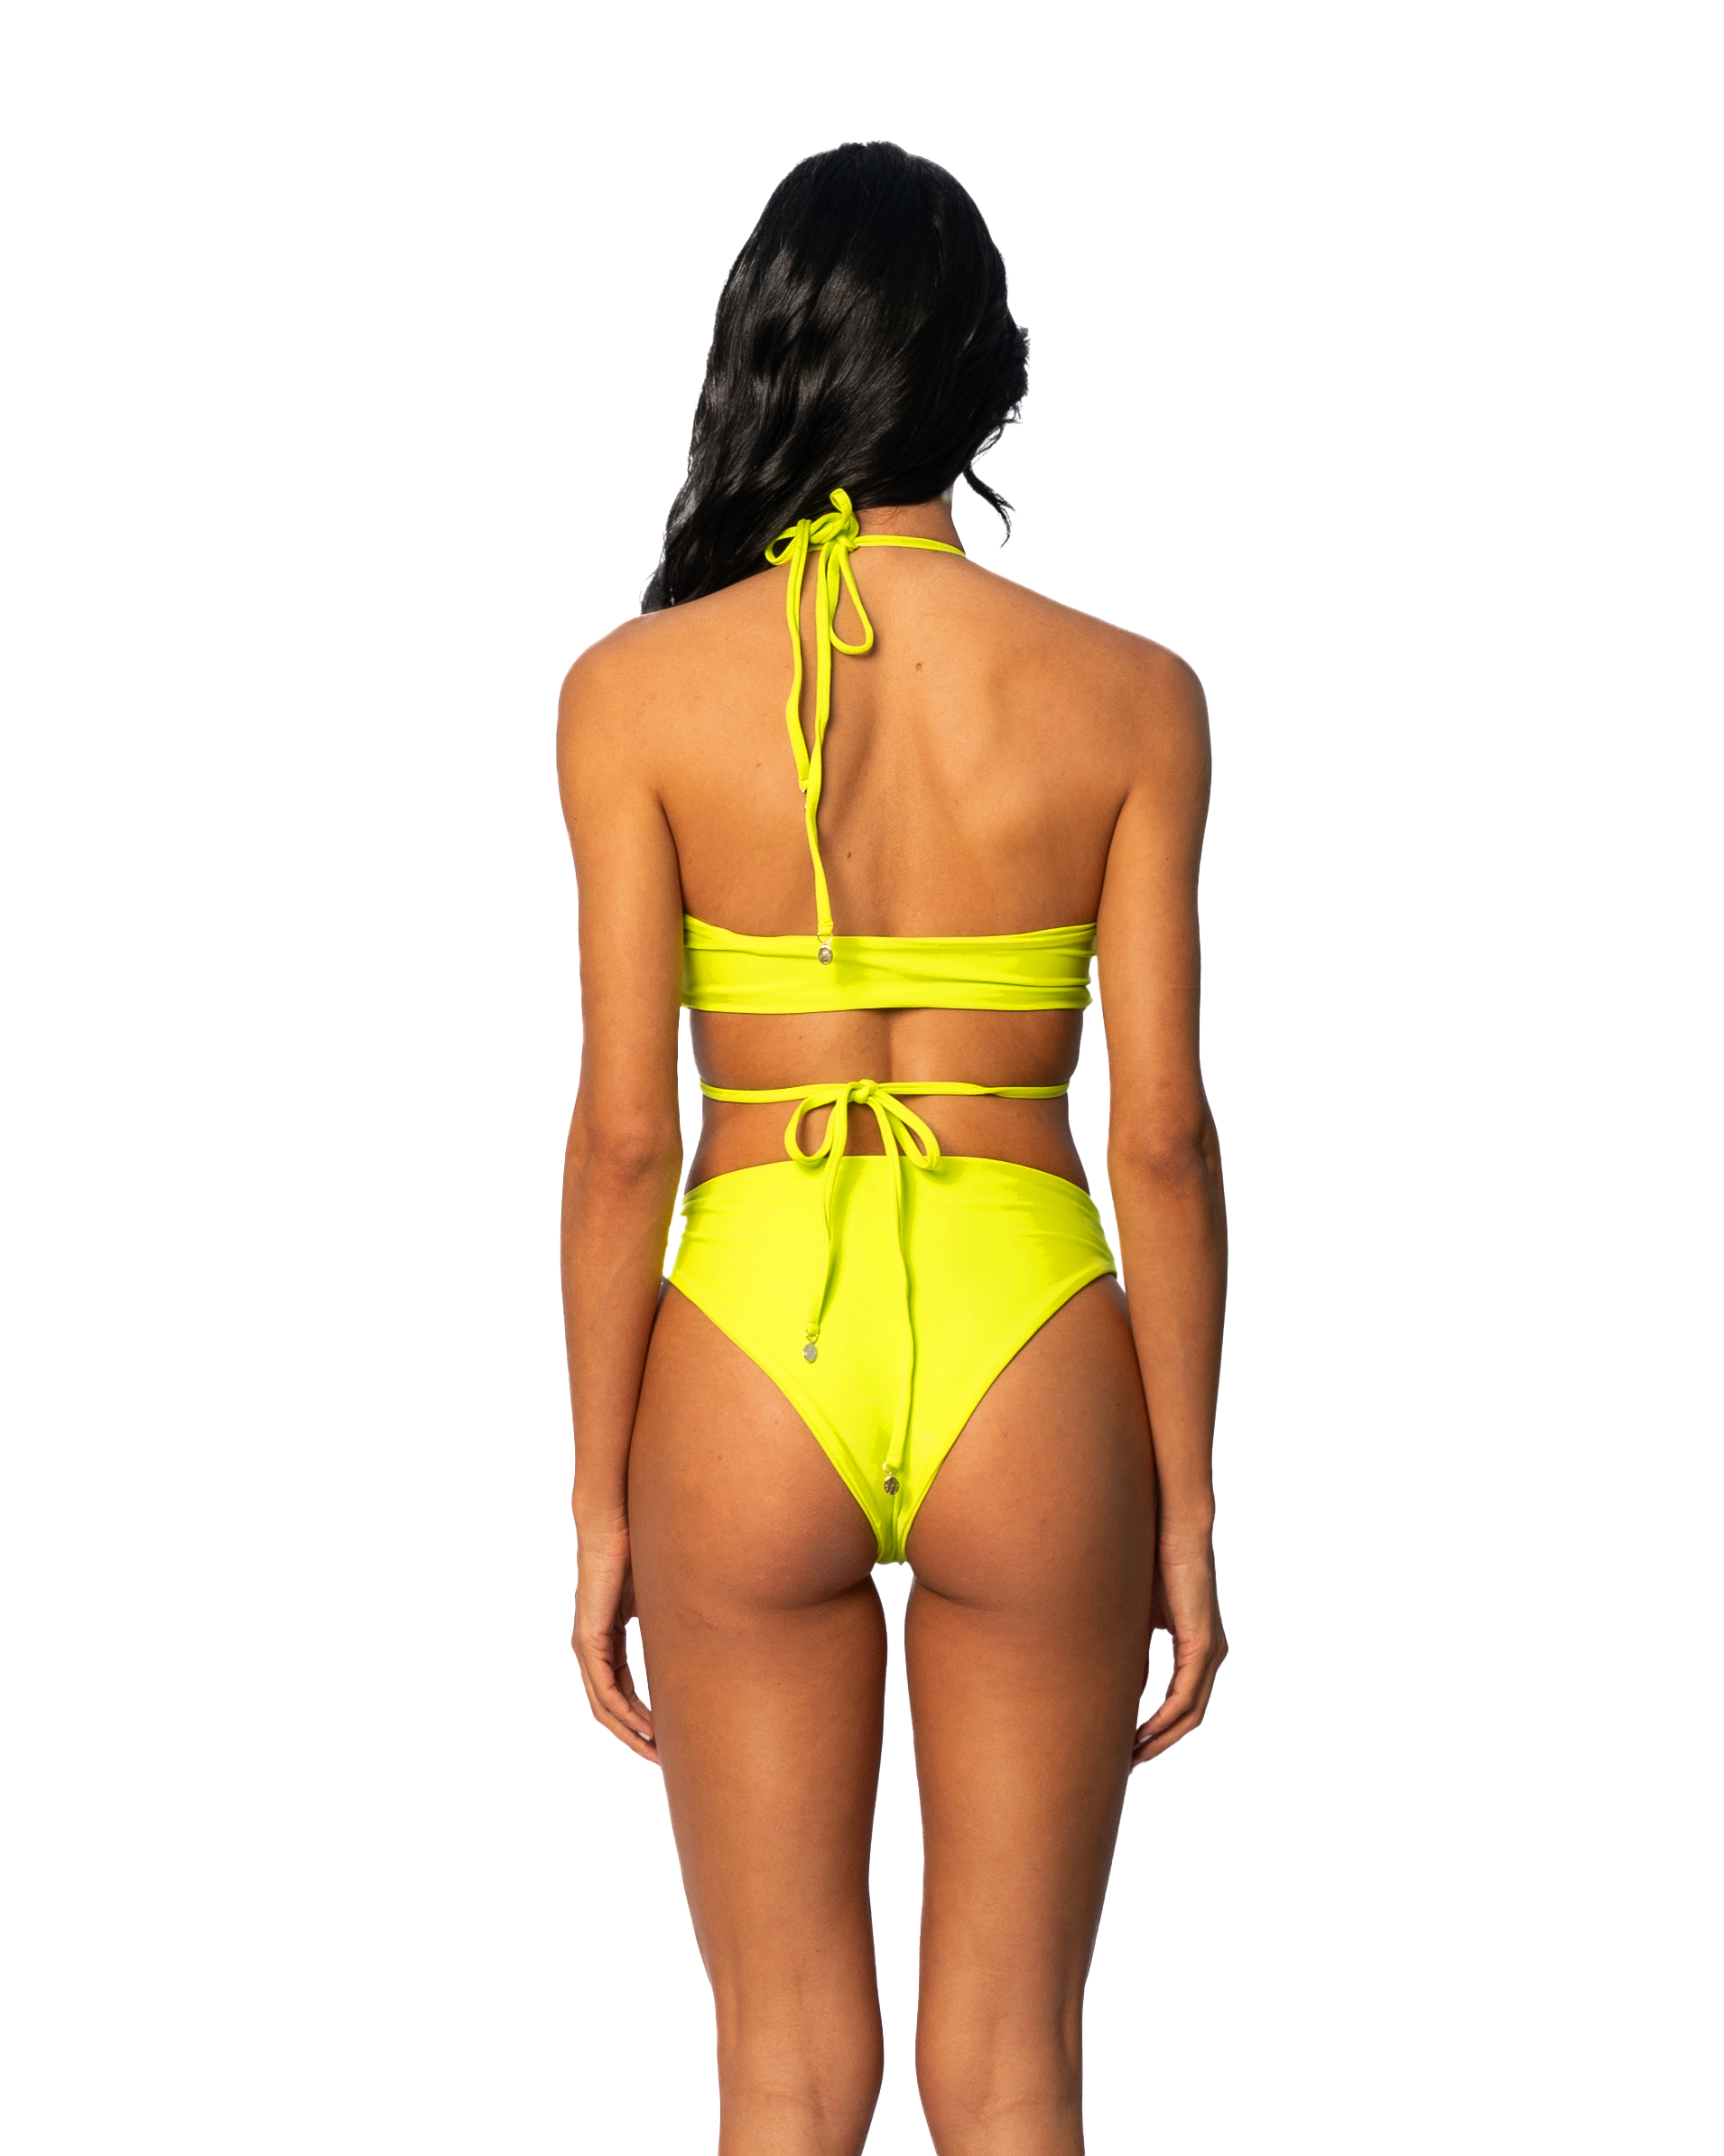 Lucida Halter Top Bikini |Green